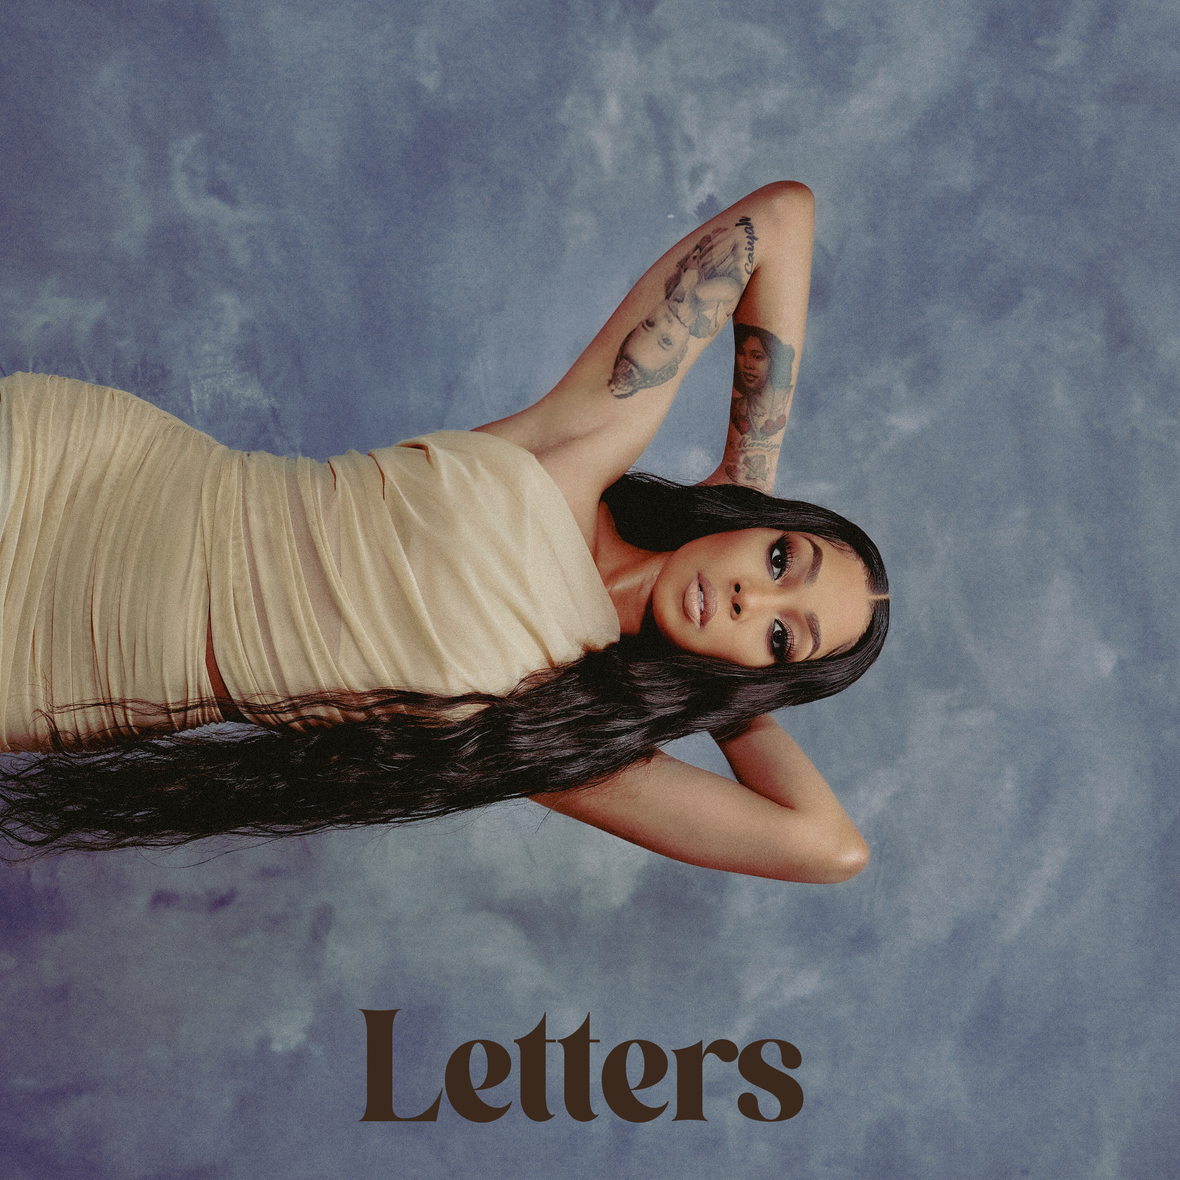 Monica - "Letters" - Single